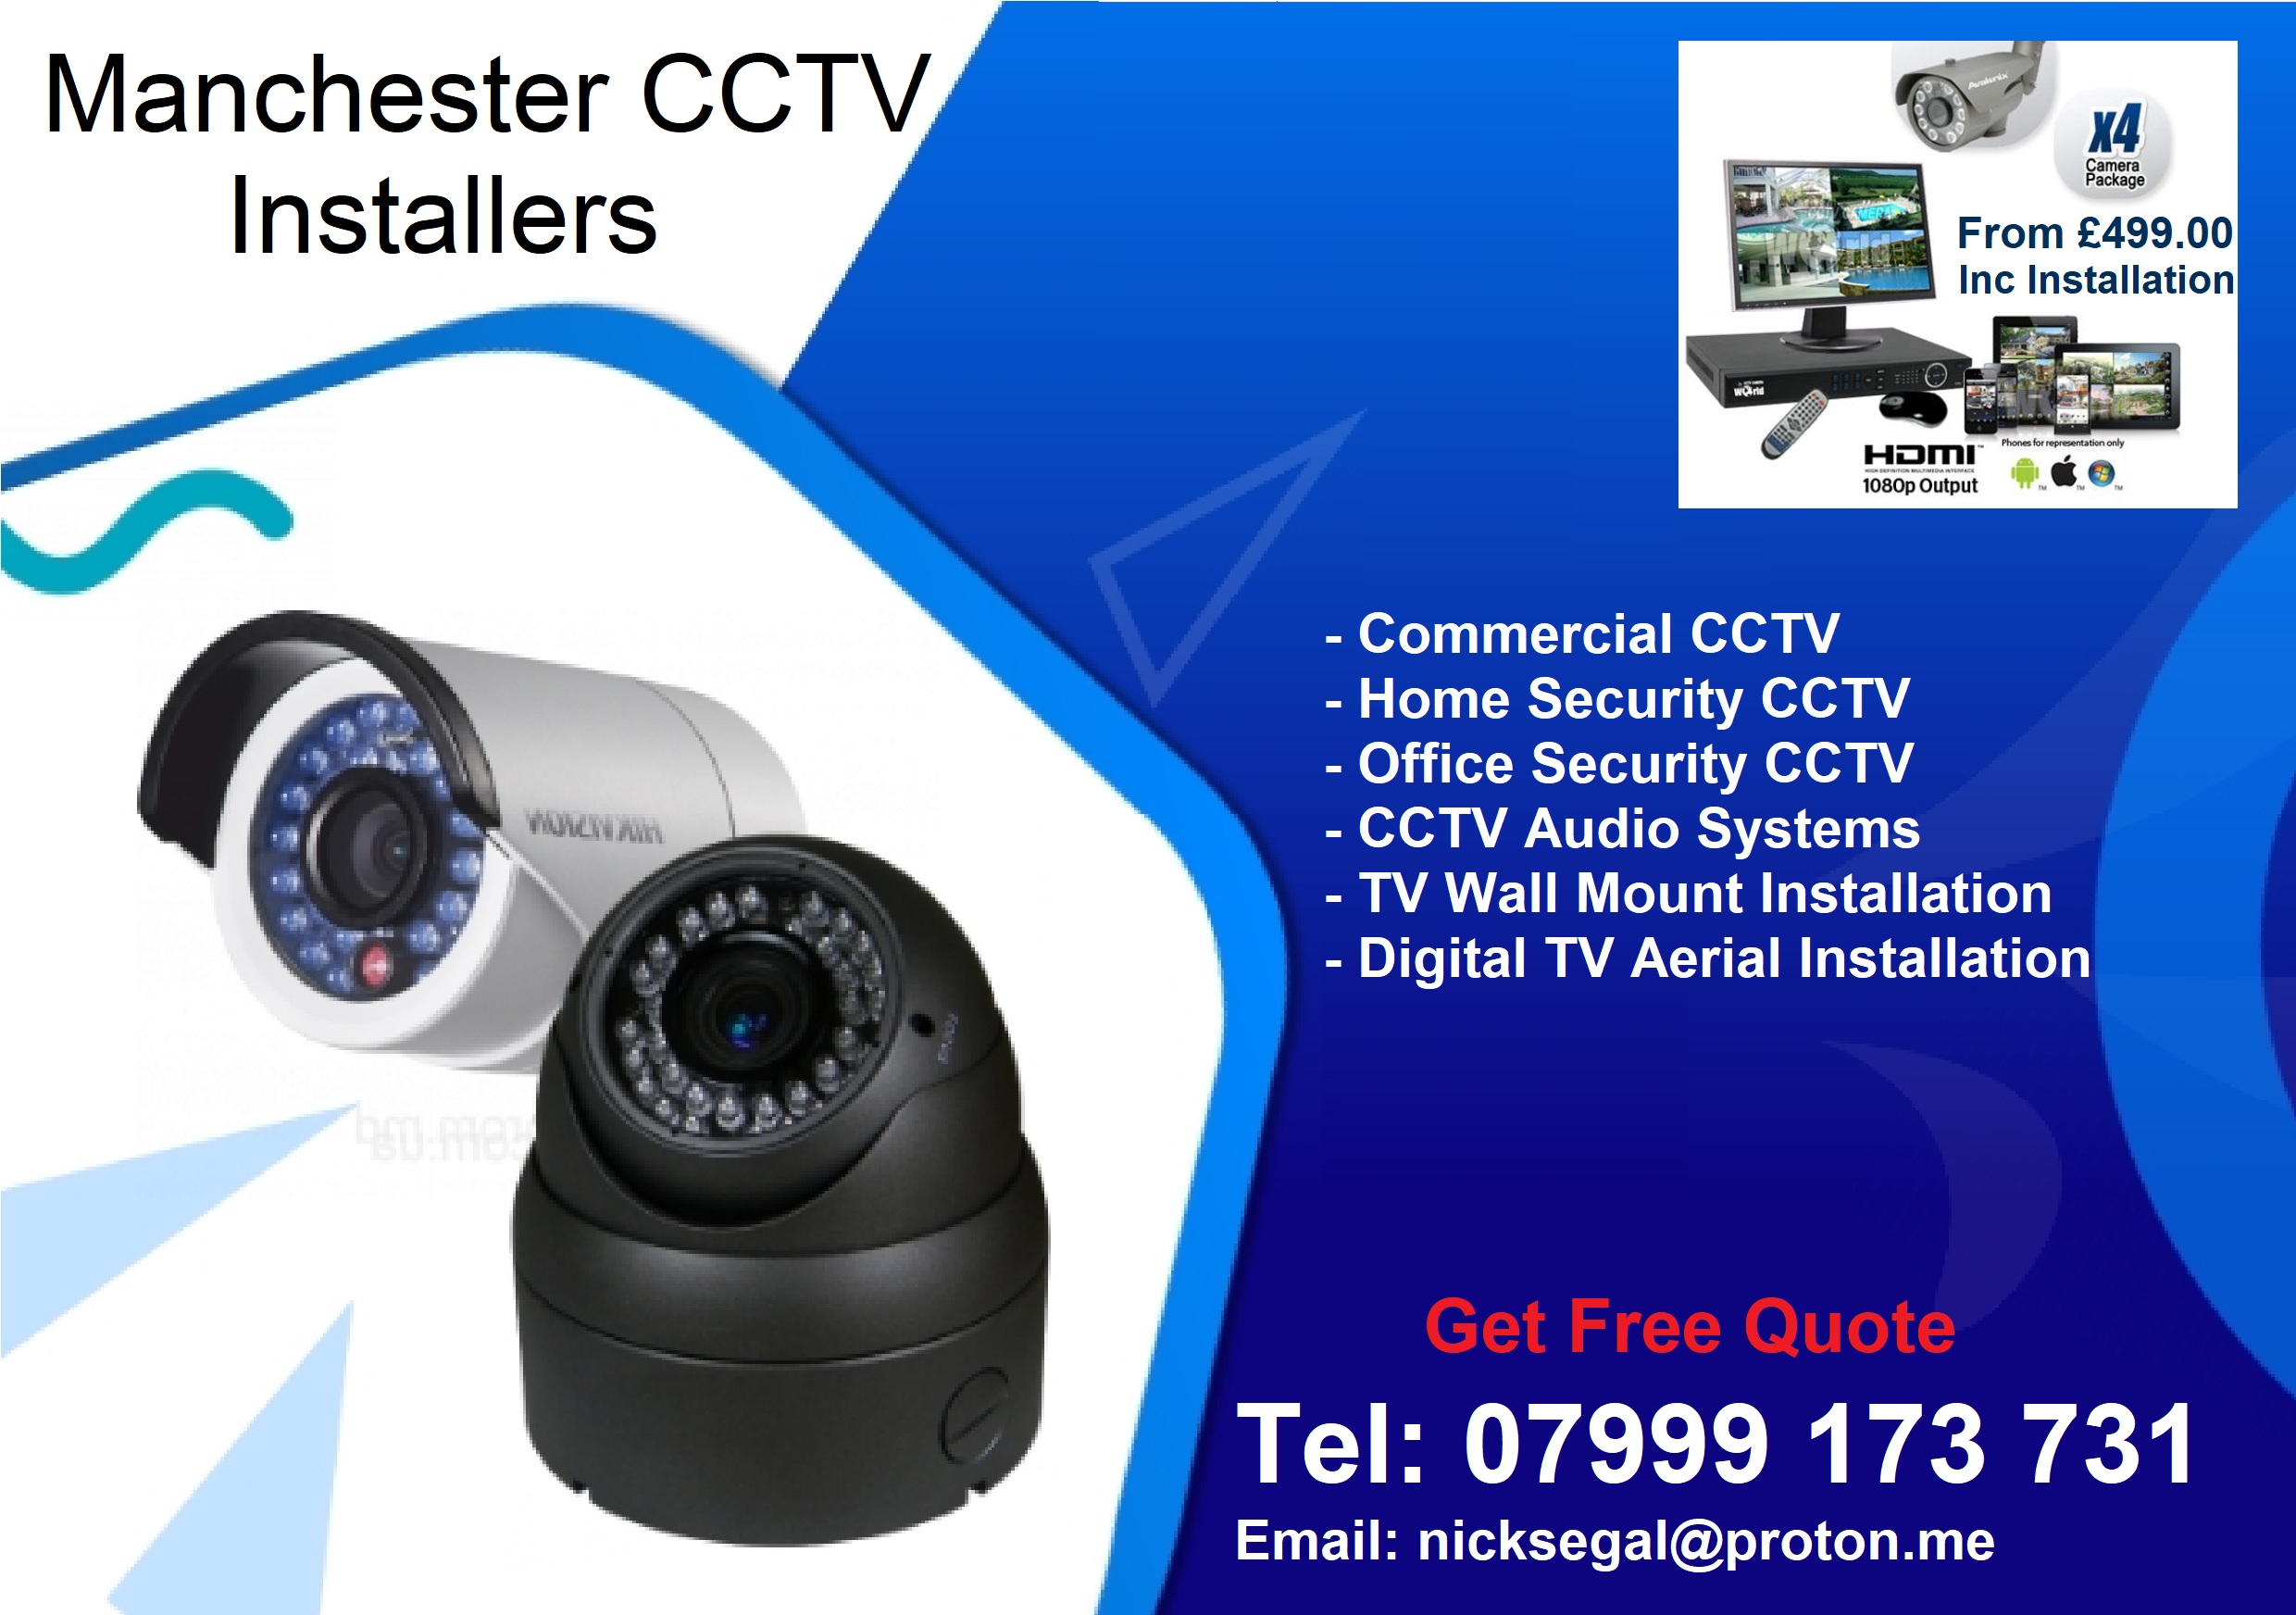 Manchester CCTV Installers